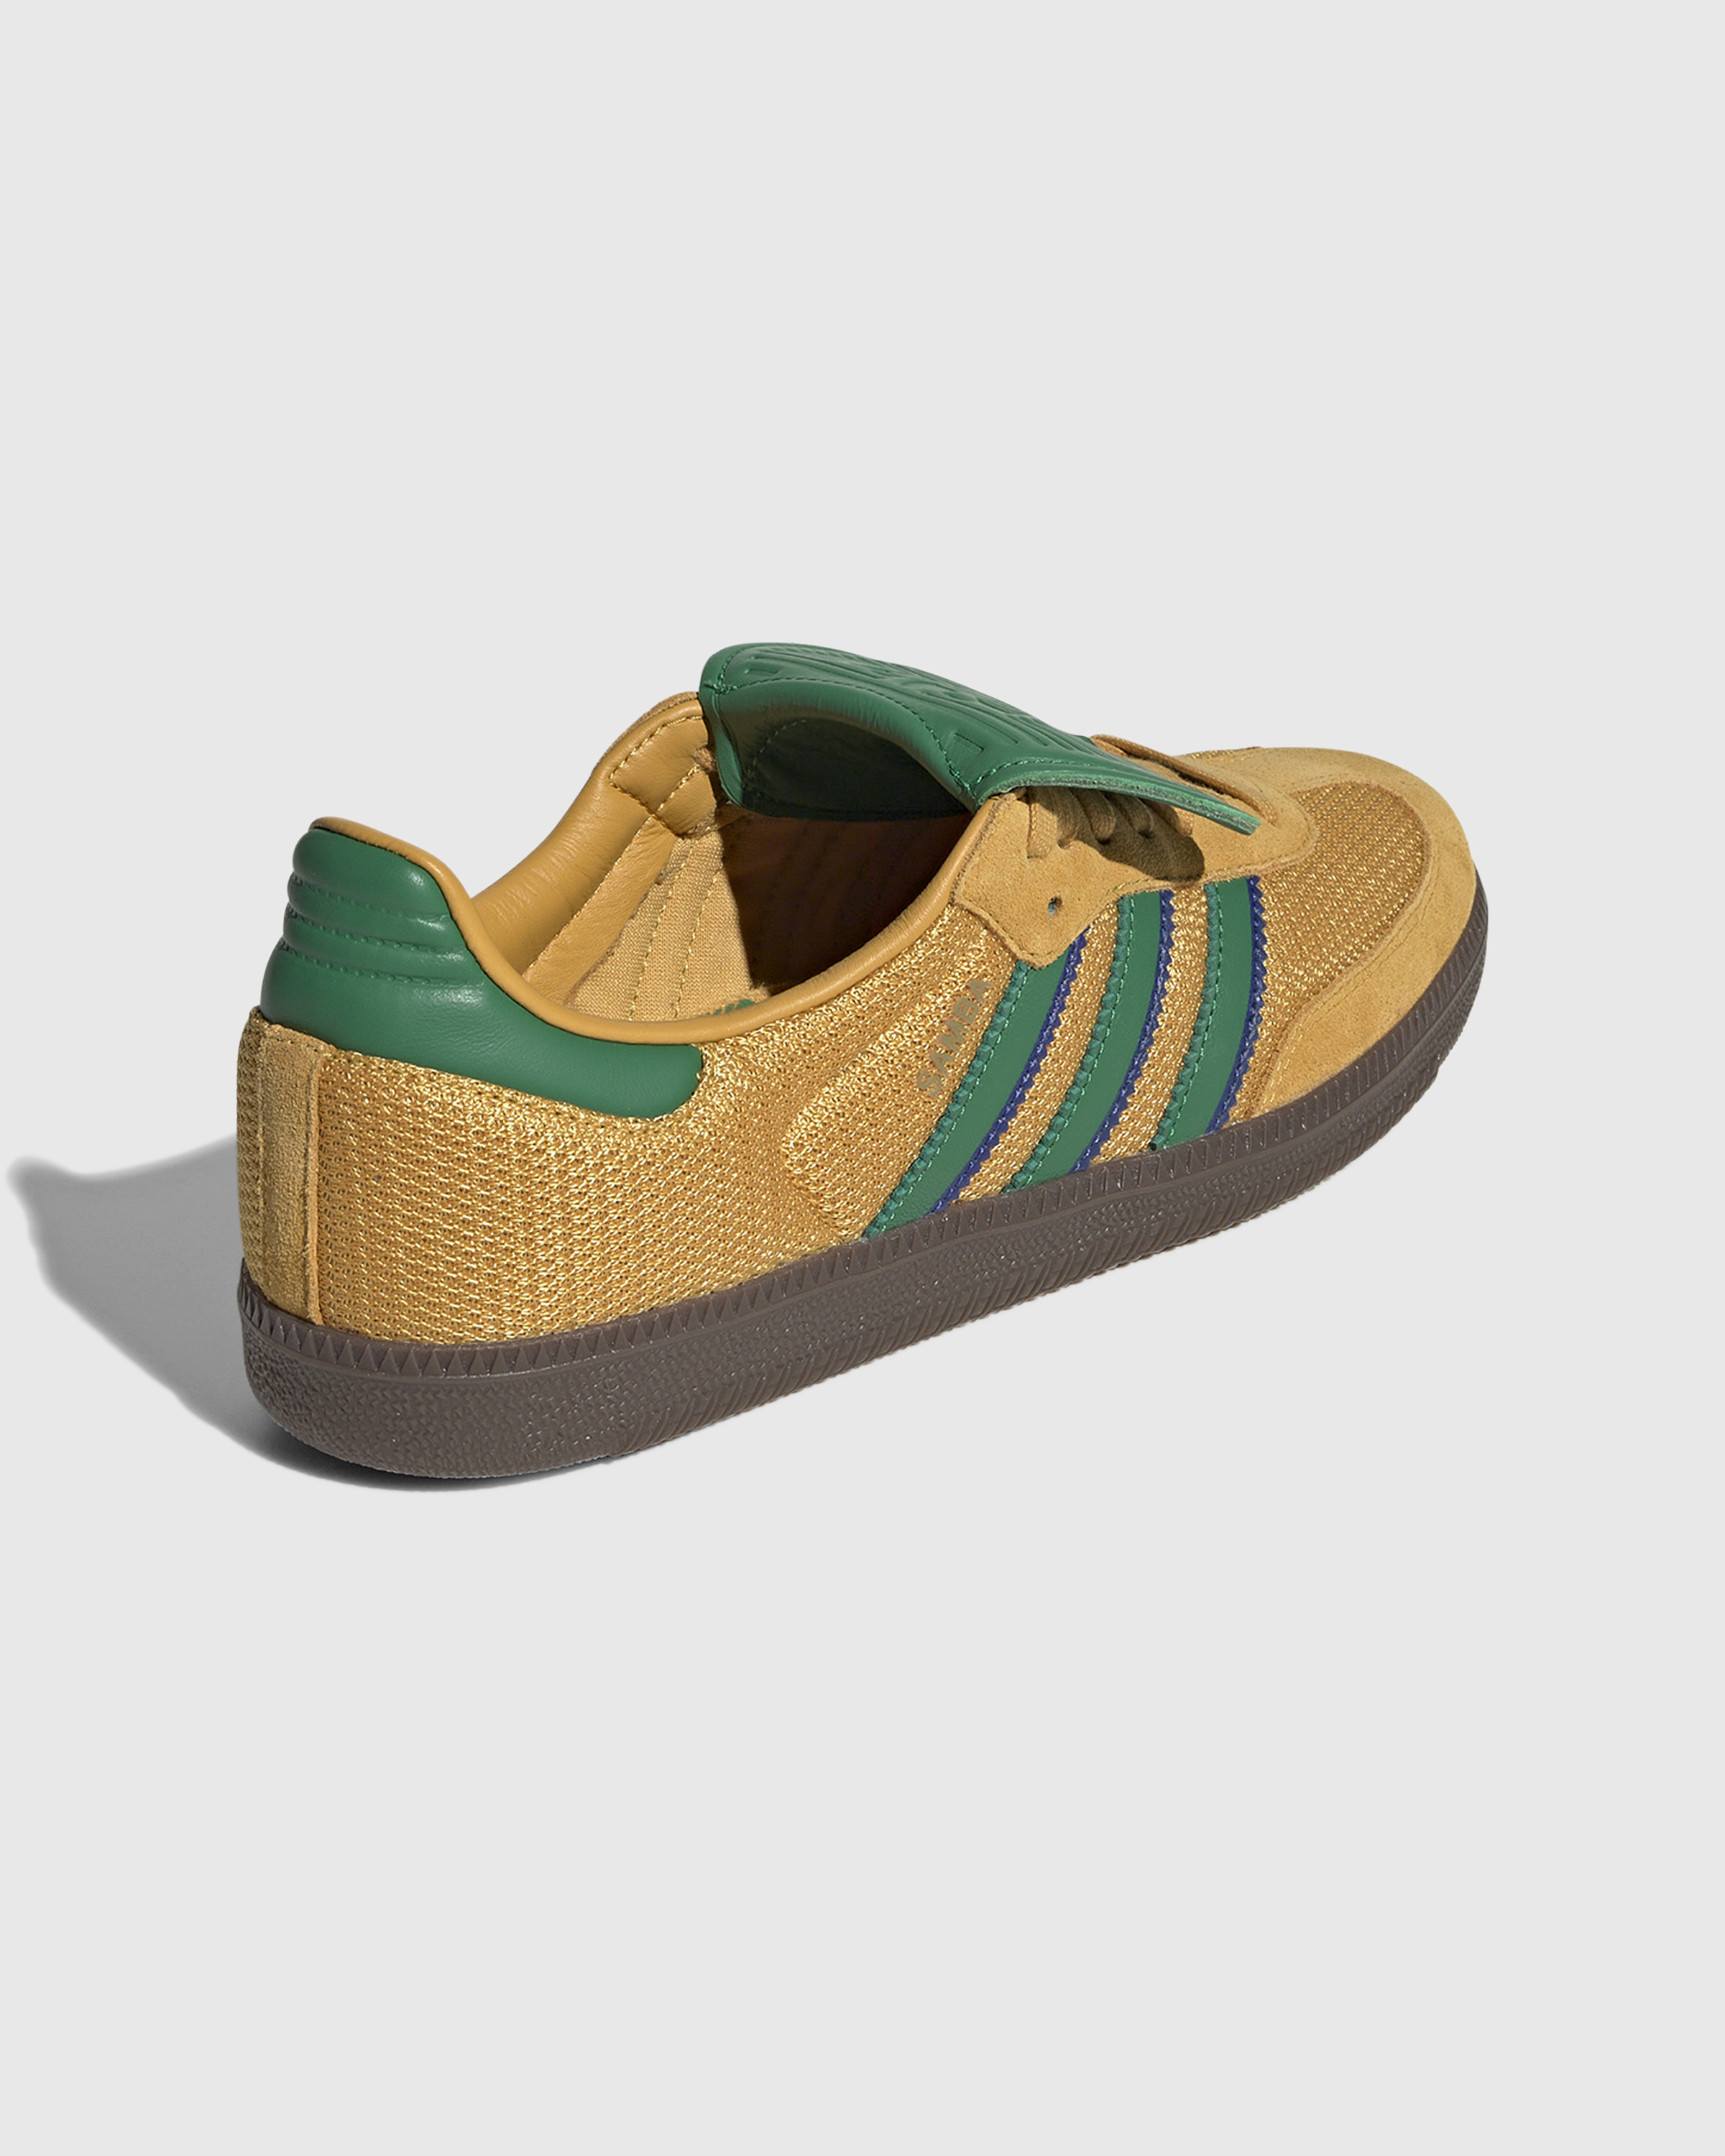 Adidas – Samba LT Preyel/Green/Gum - Low Top Sneakers - Orange - Image 4